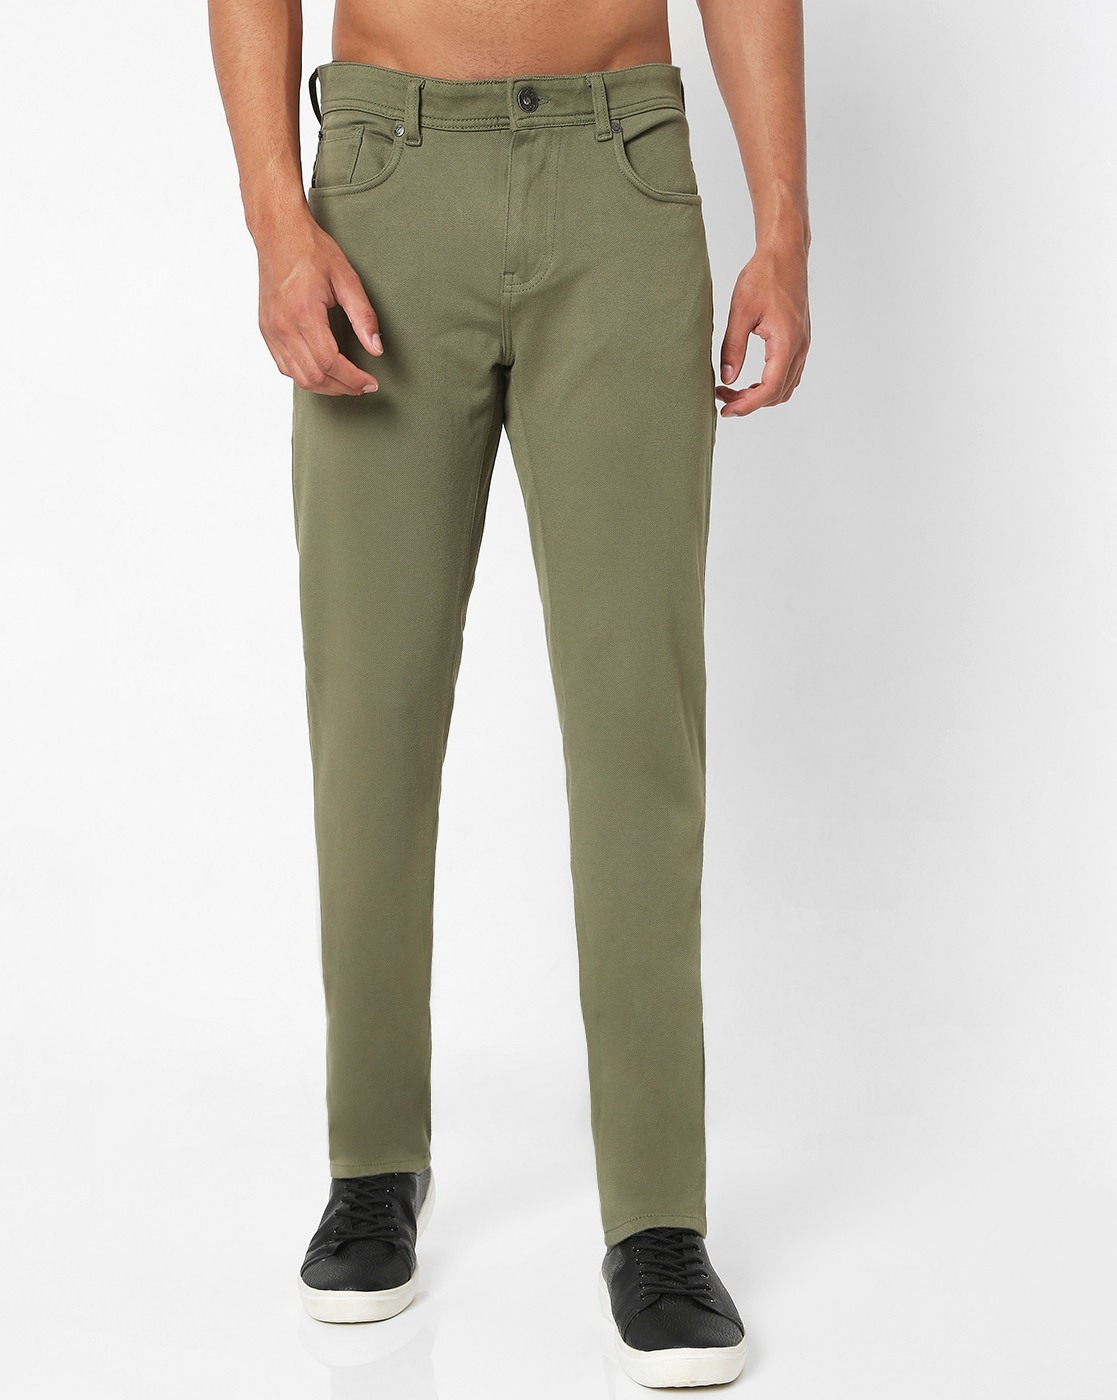 Buy Brown Trousers  Pants for Men by GAS Online  Ajiocom